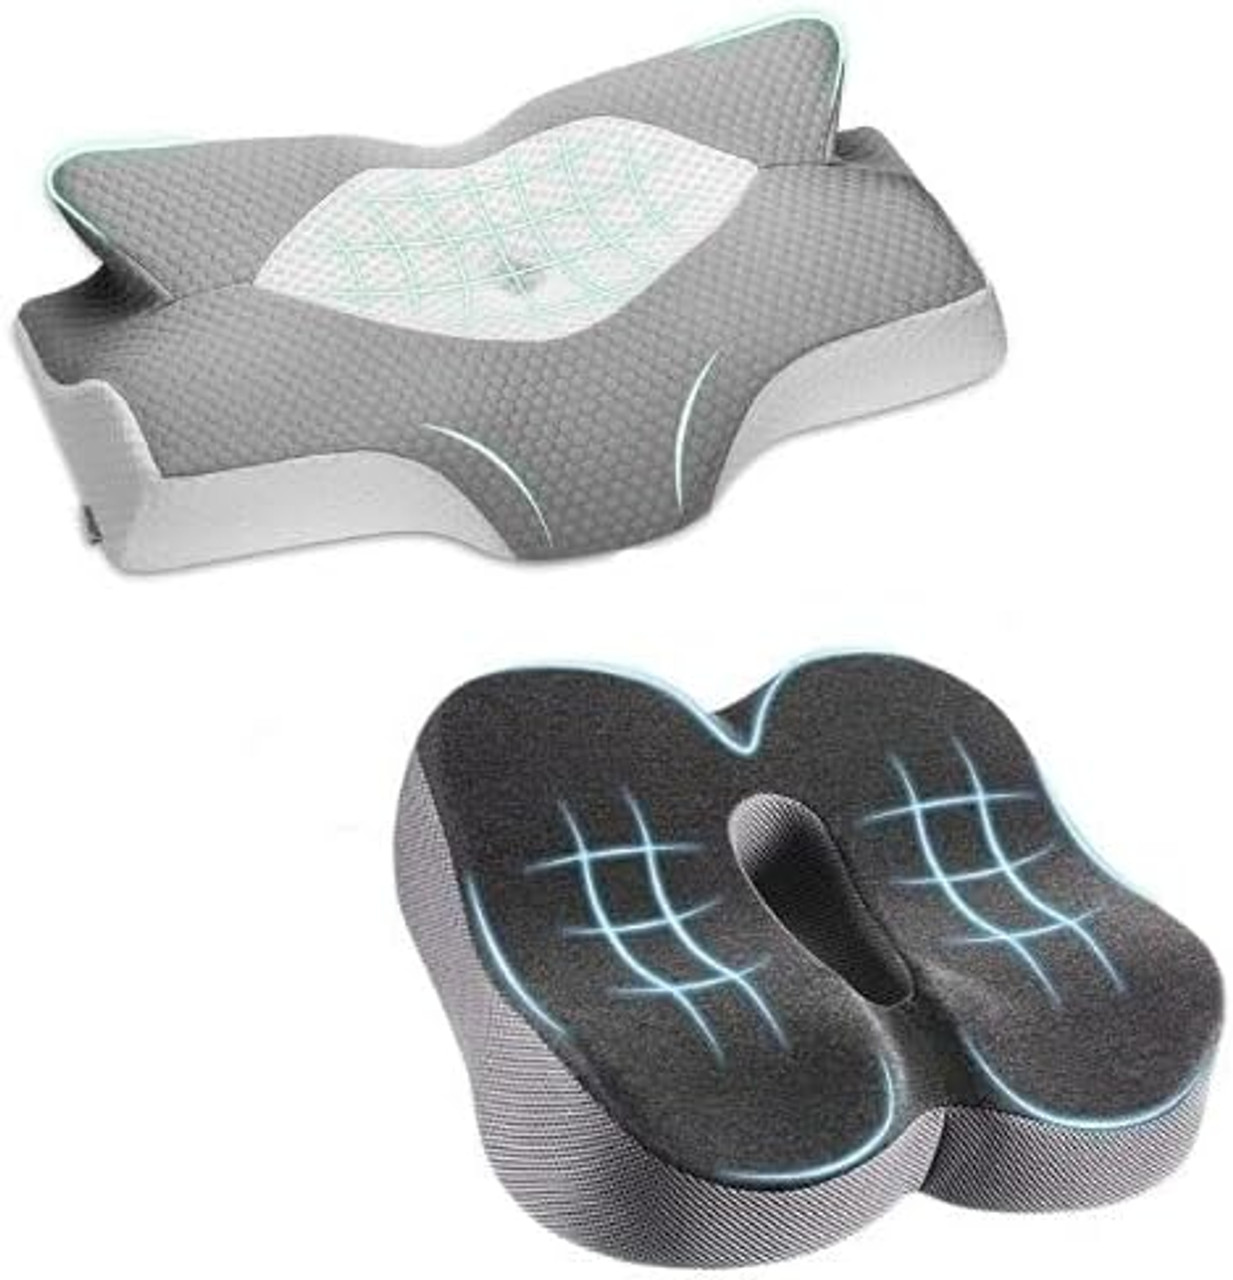 Coccyx Support Cushion Pillow, memory foam coccyx pillow – snoringz